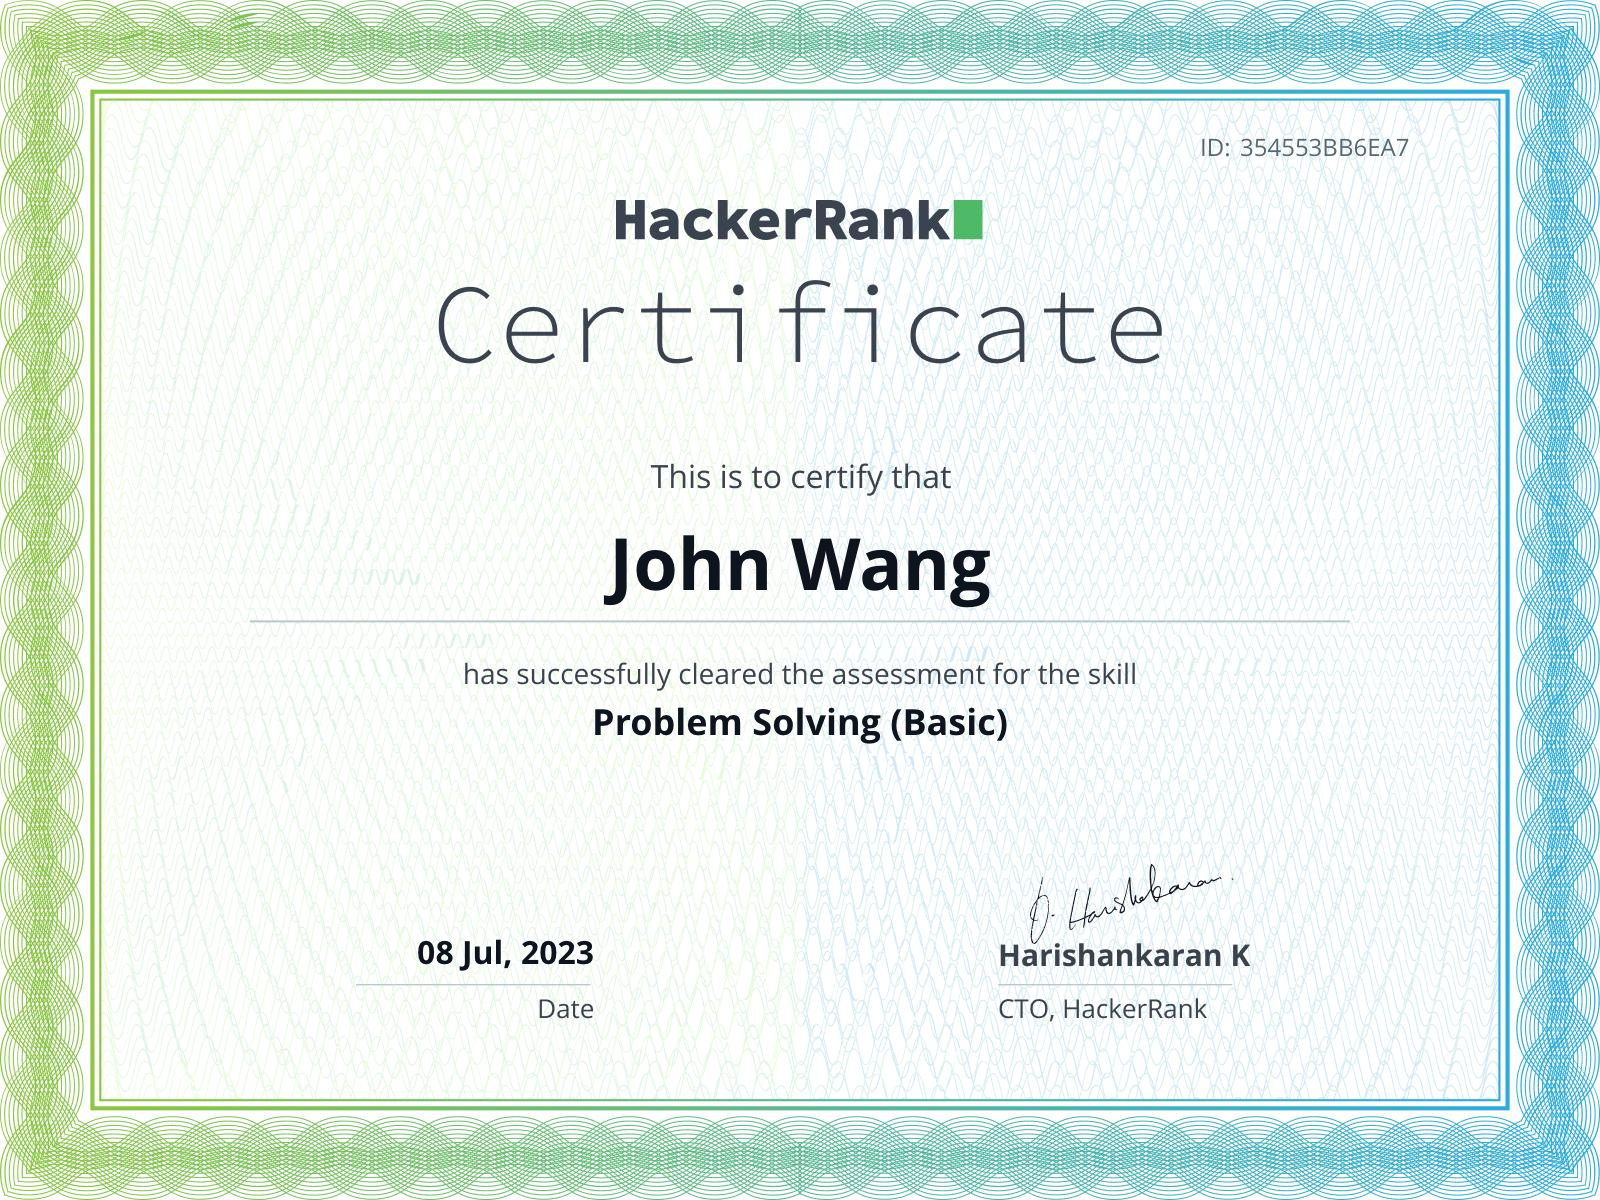 John's Problem Solving (Basic) from HackerRank